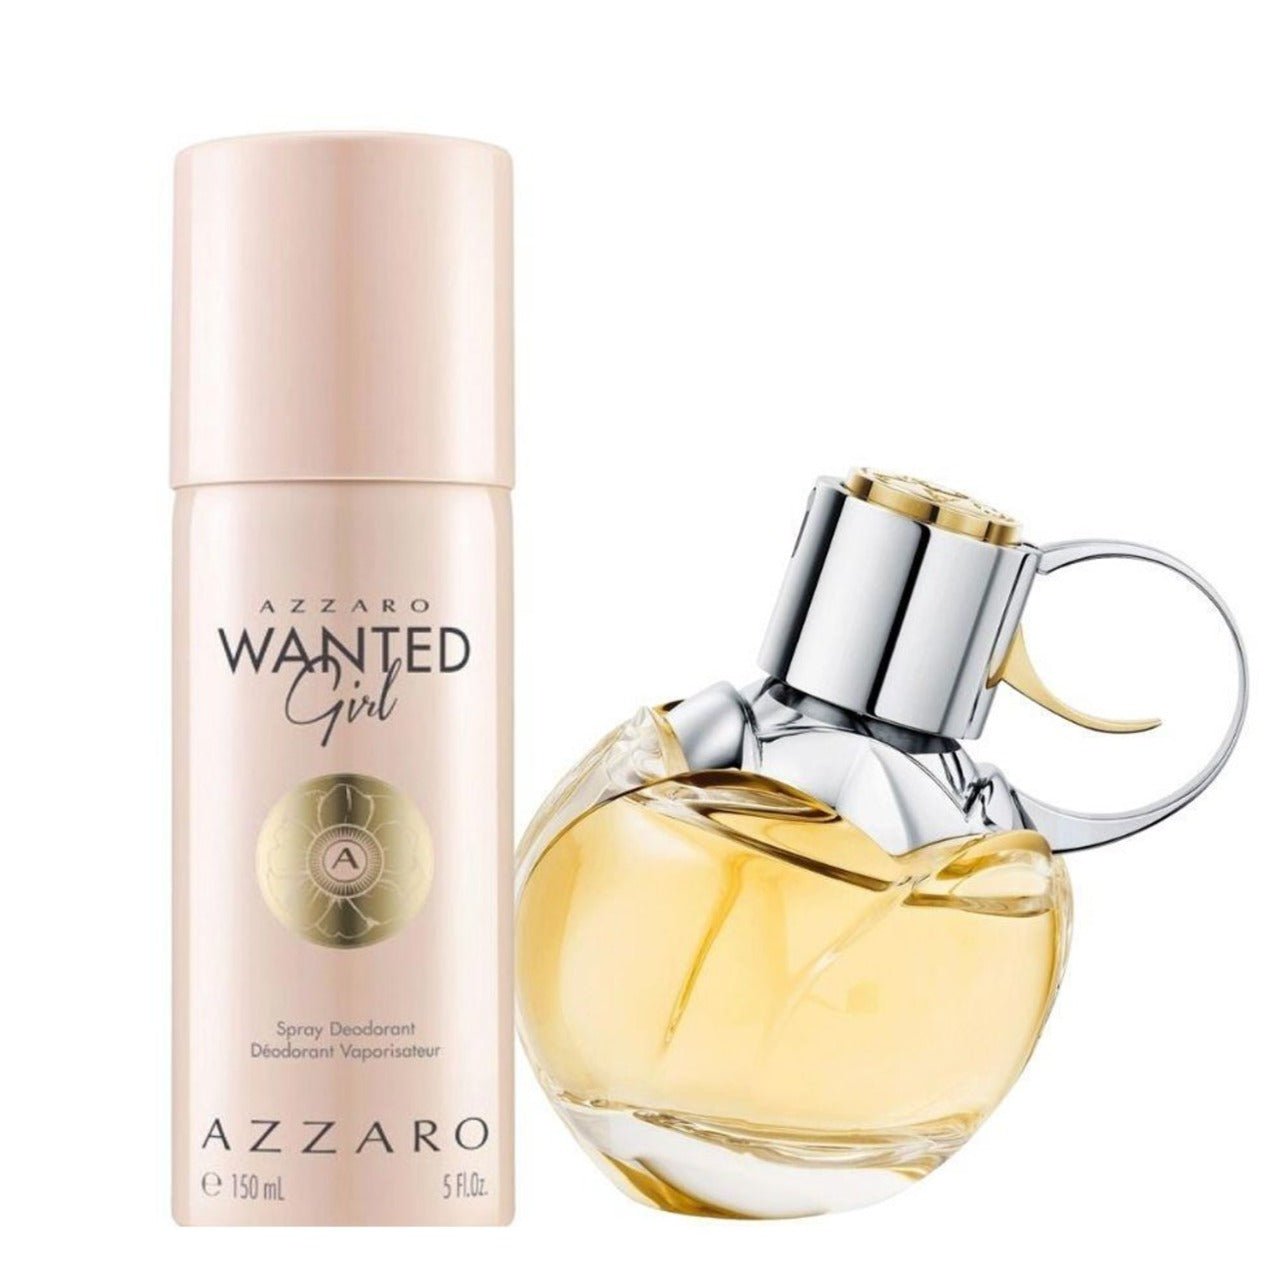 Azzaro Wanted Girl Deodorant Spray | My Perfume Shop Australia